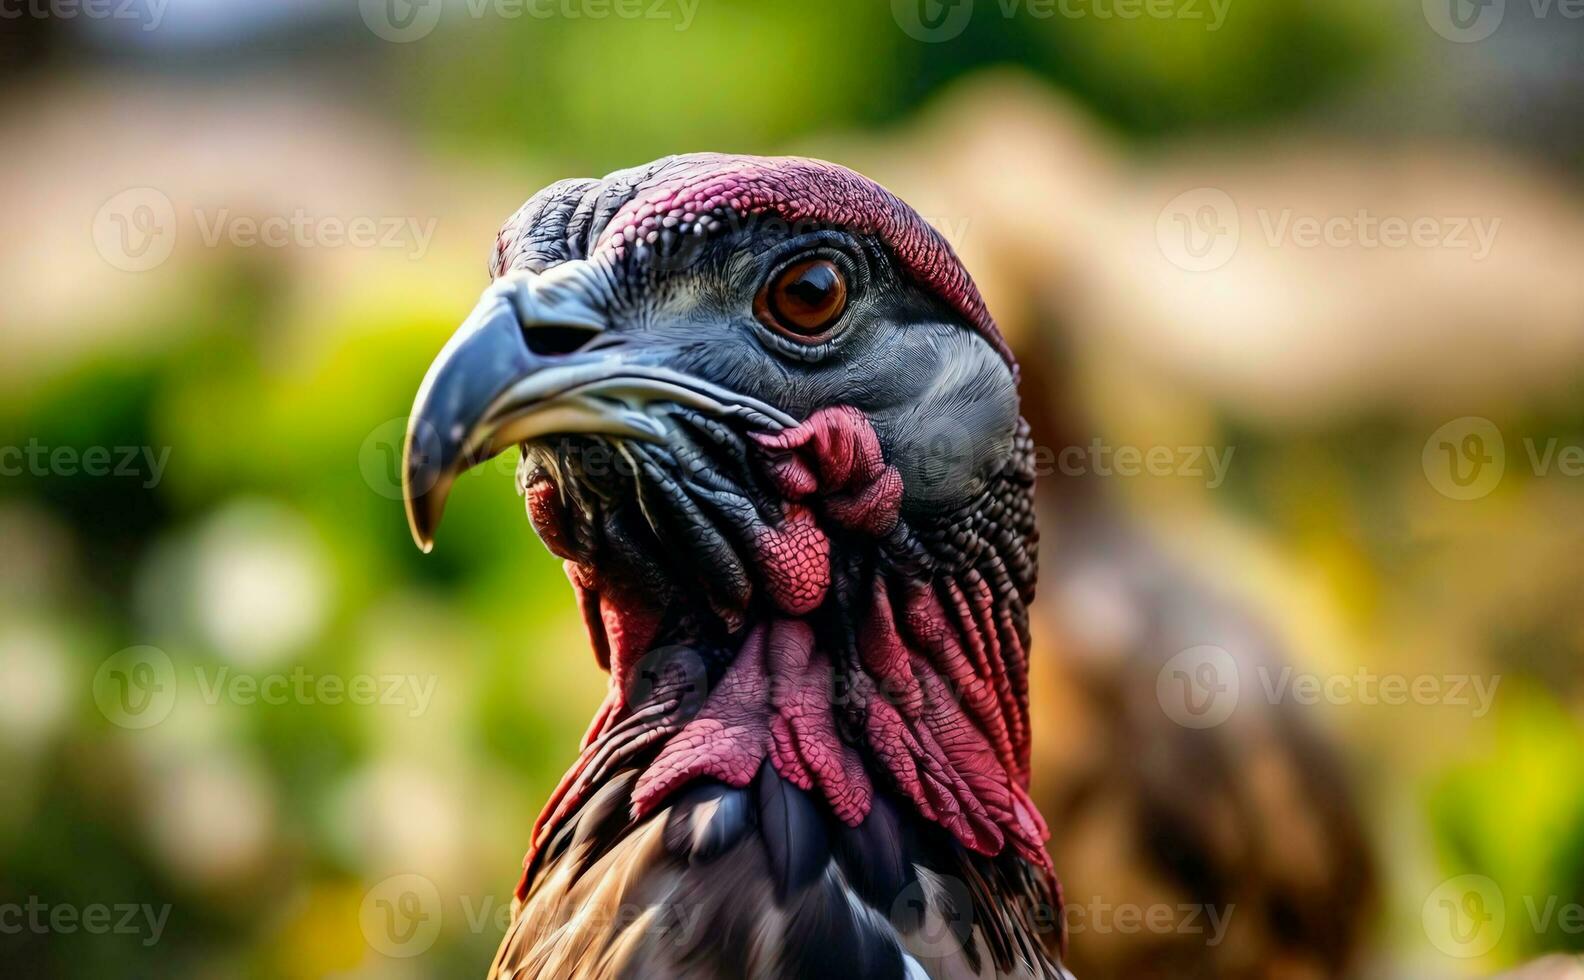 Turkey hen closeup portrait. photo